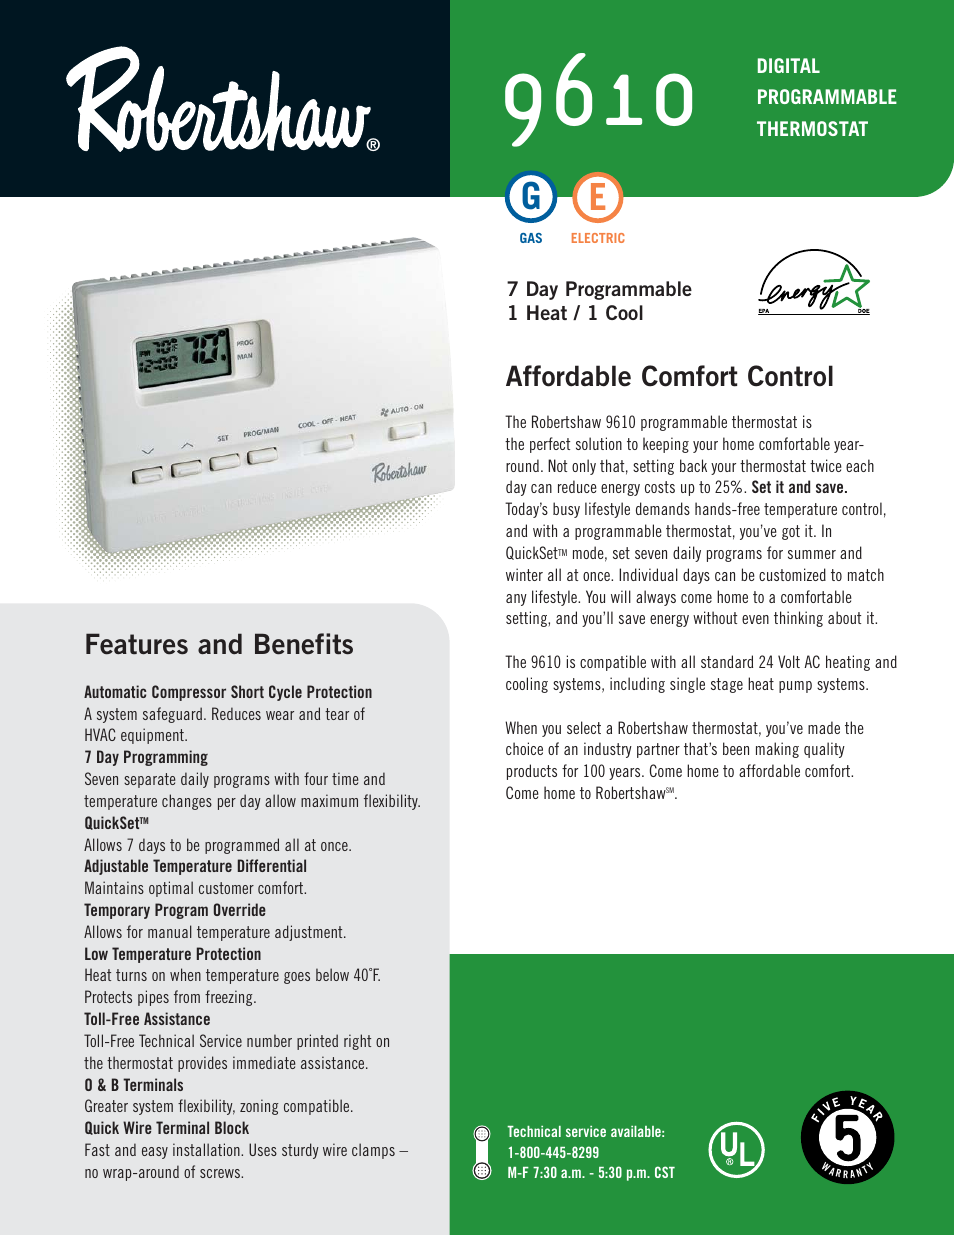 Robert shaw 9600 thermostat user manual